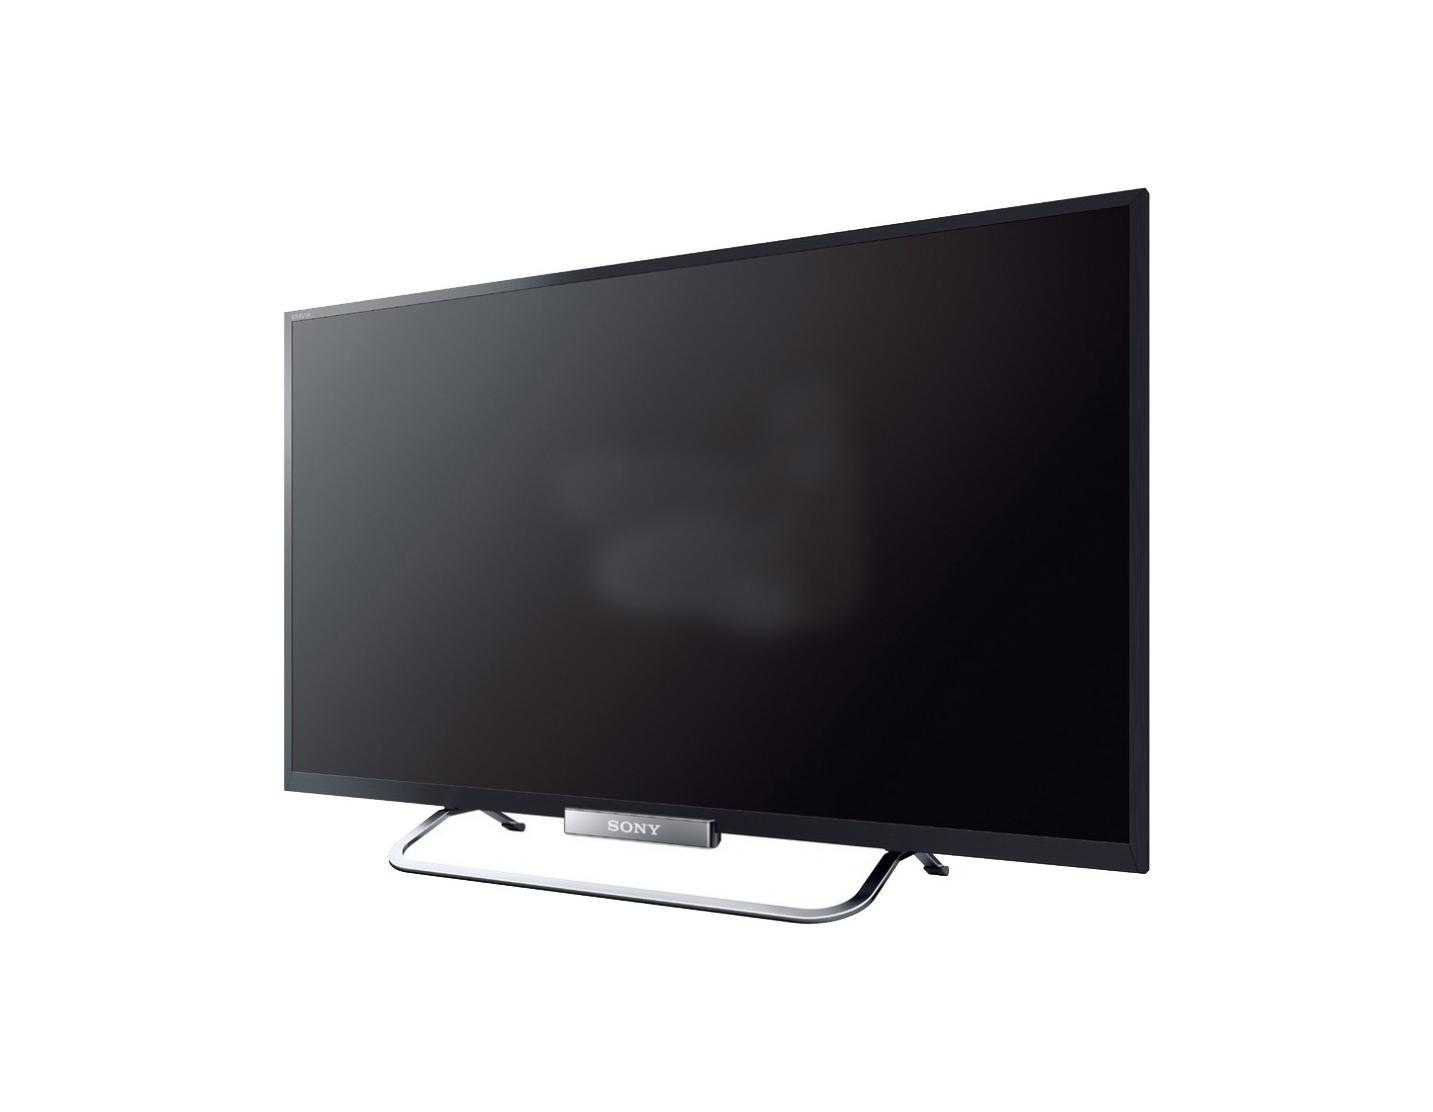 Sony kdl-65w855a - купить , скидки, цена, отзывы, обзор, характеристики - телевизоры